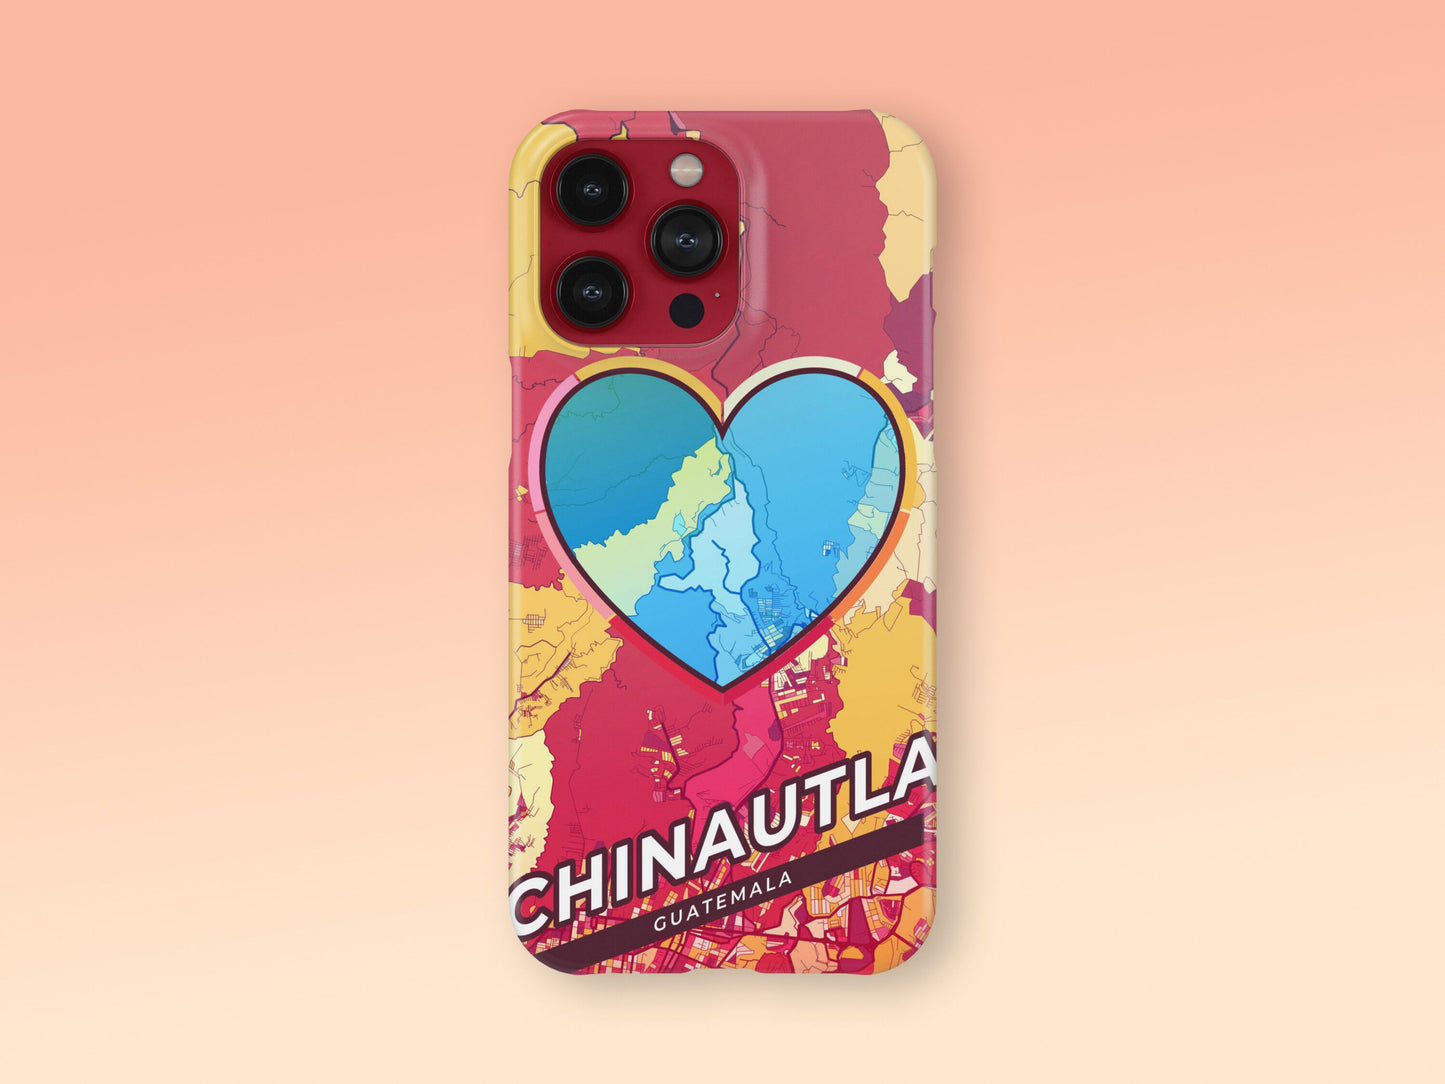 Chinautla Guatemala slim phone case with colorful icon. Birthday, wedding or housewarming gift. Couple match cases. 2